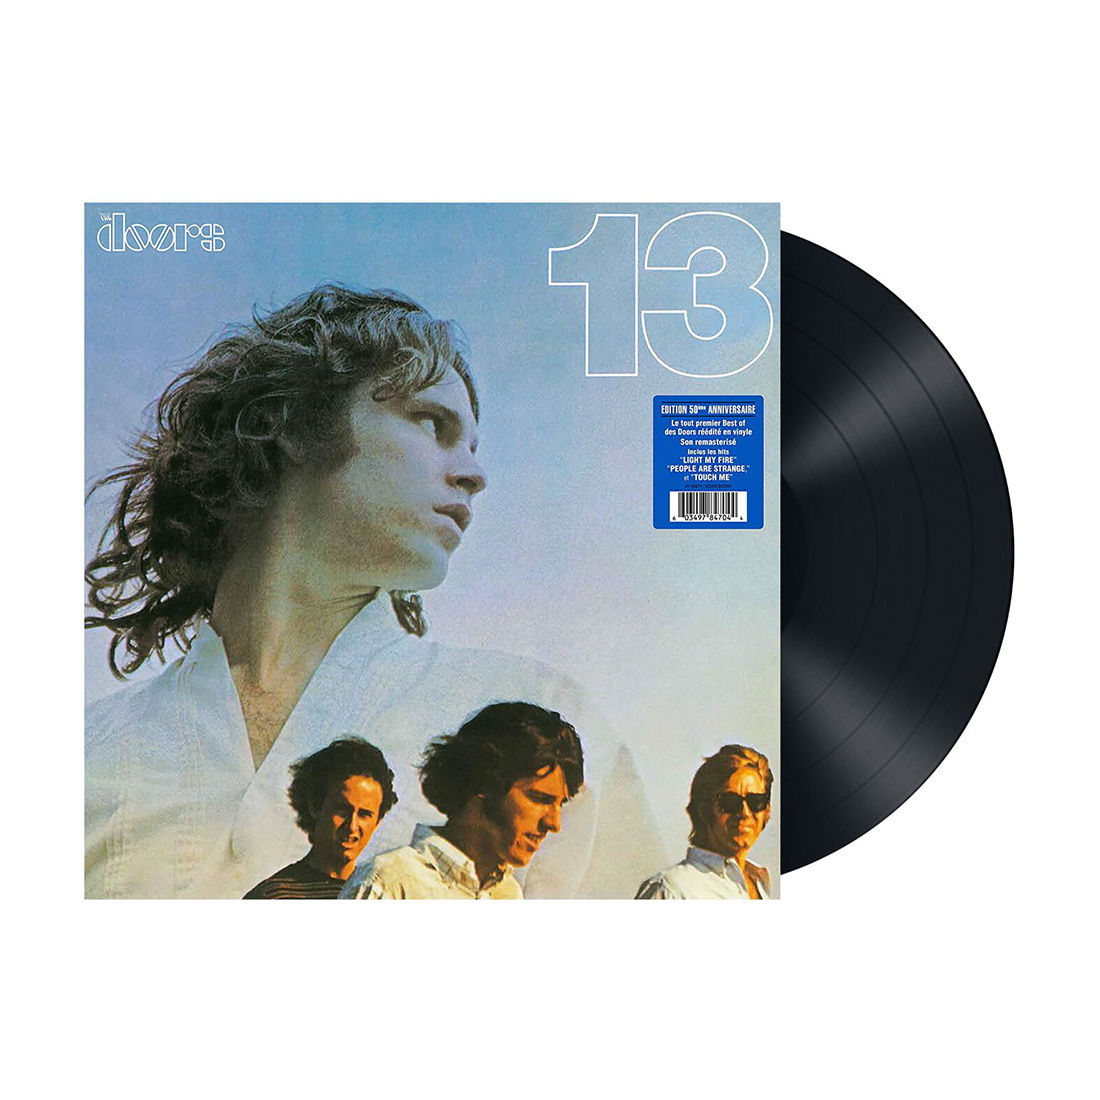 13: Vinyl LP